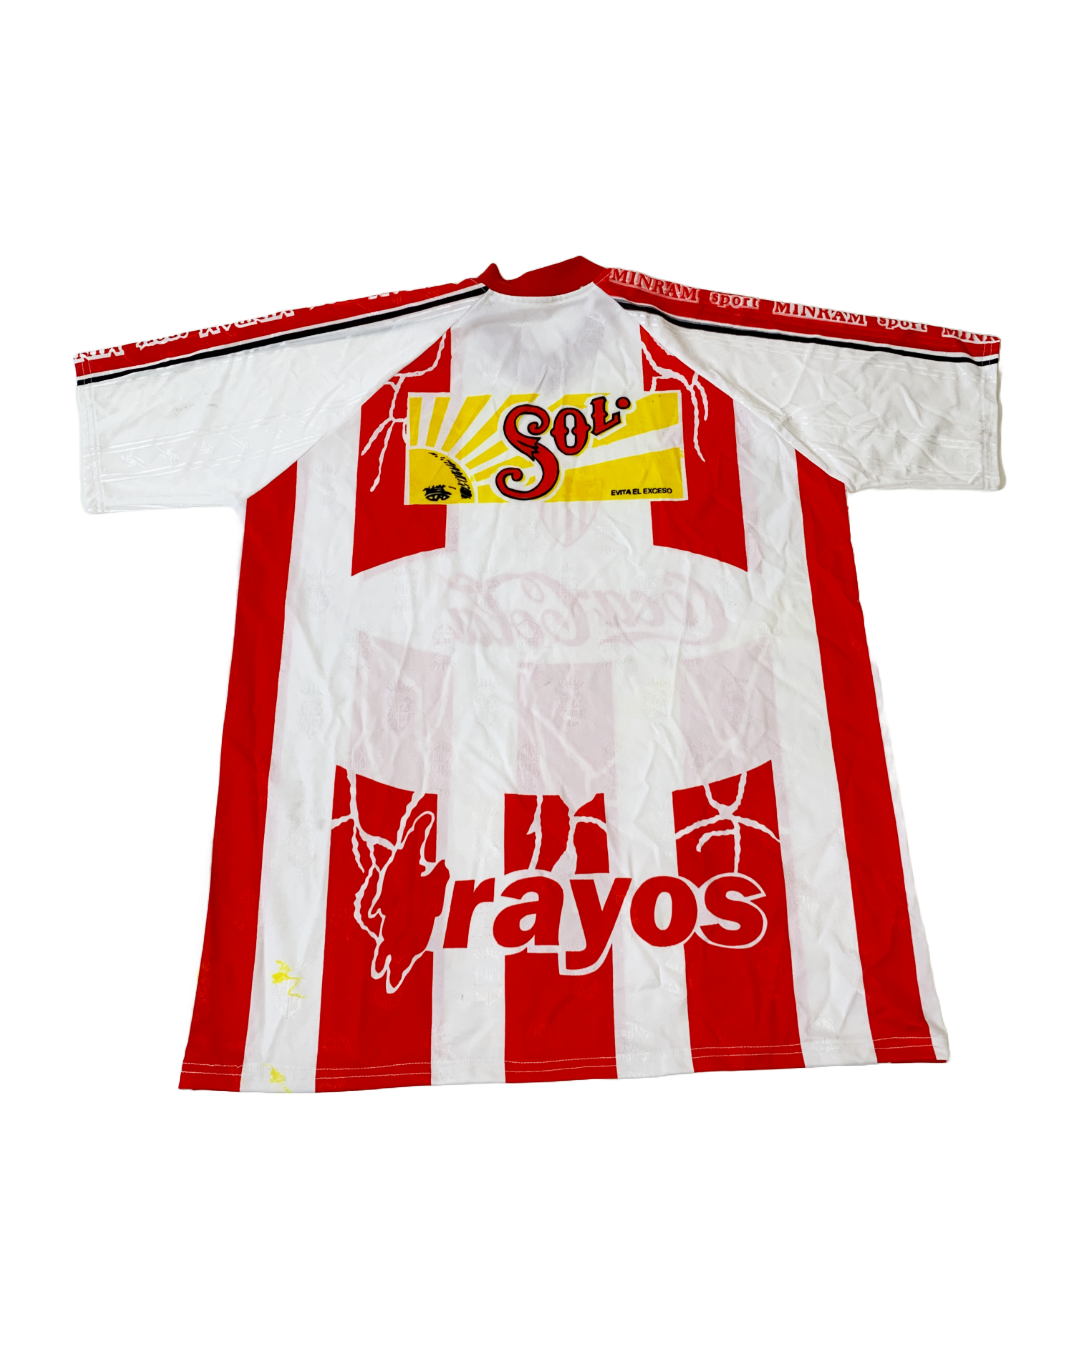 Necaxa Rayos Vintage Jersey - XL